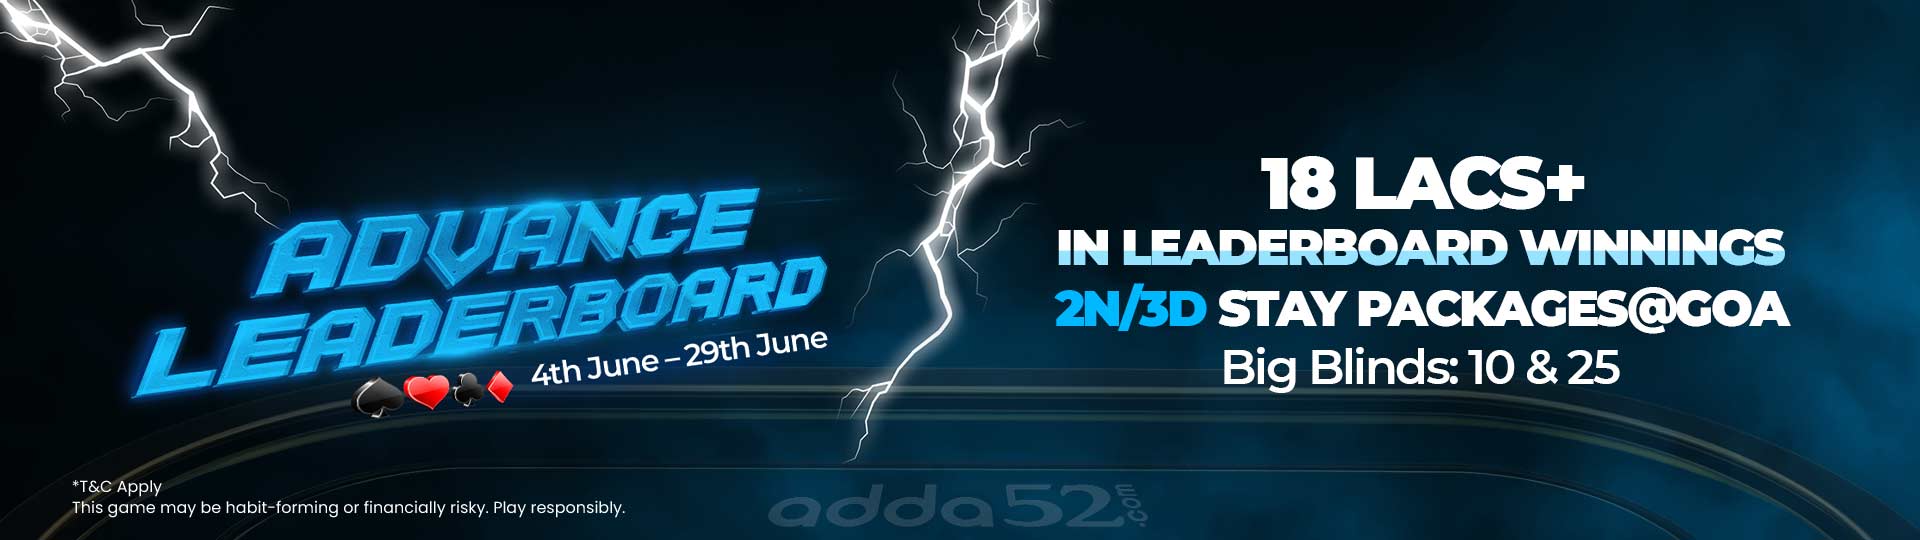 Adda52|Online|Poker|Advance Leaderboards|June